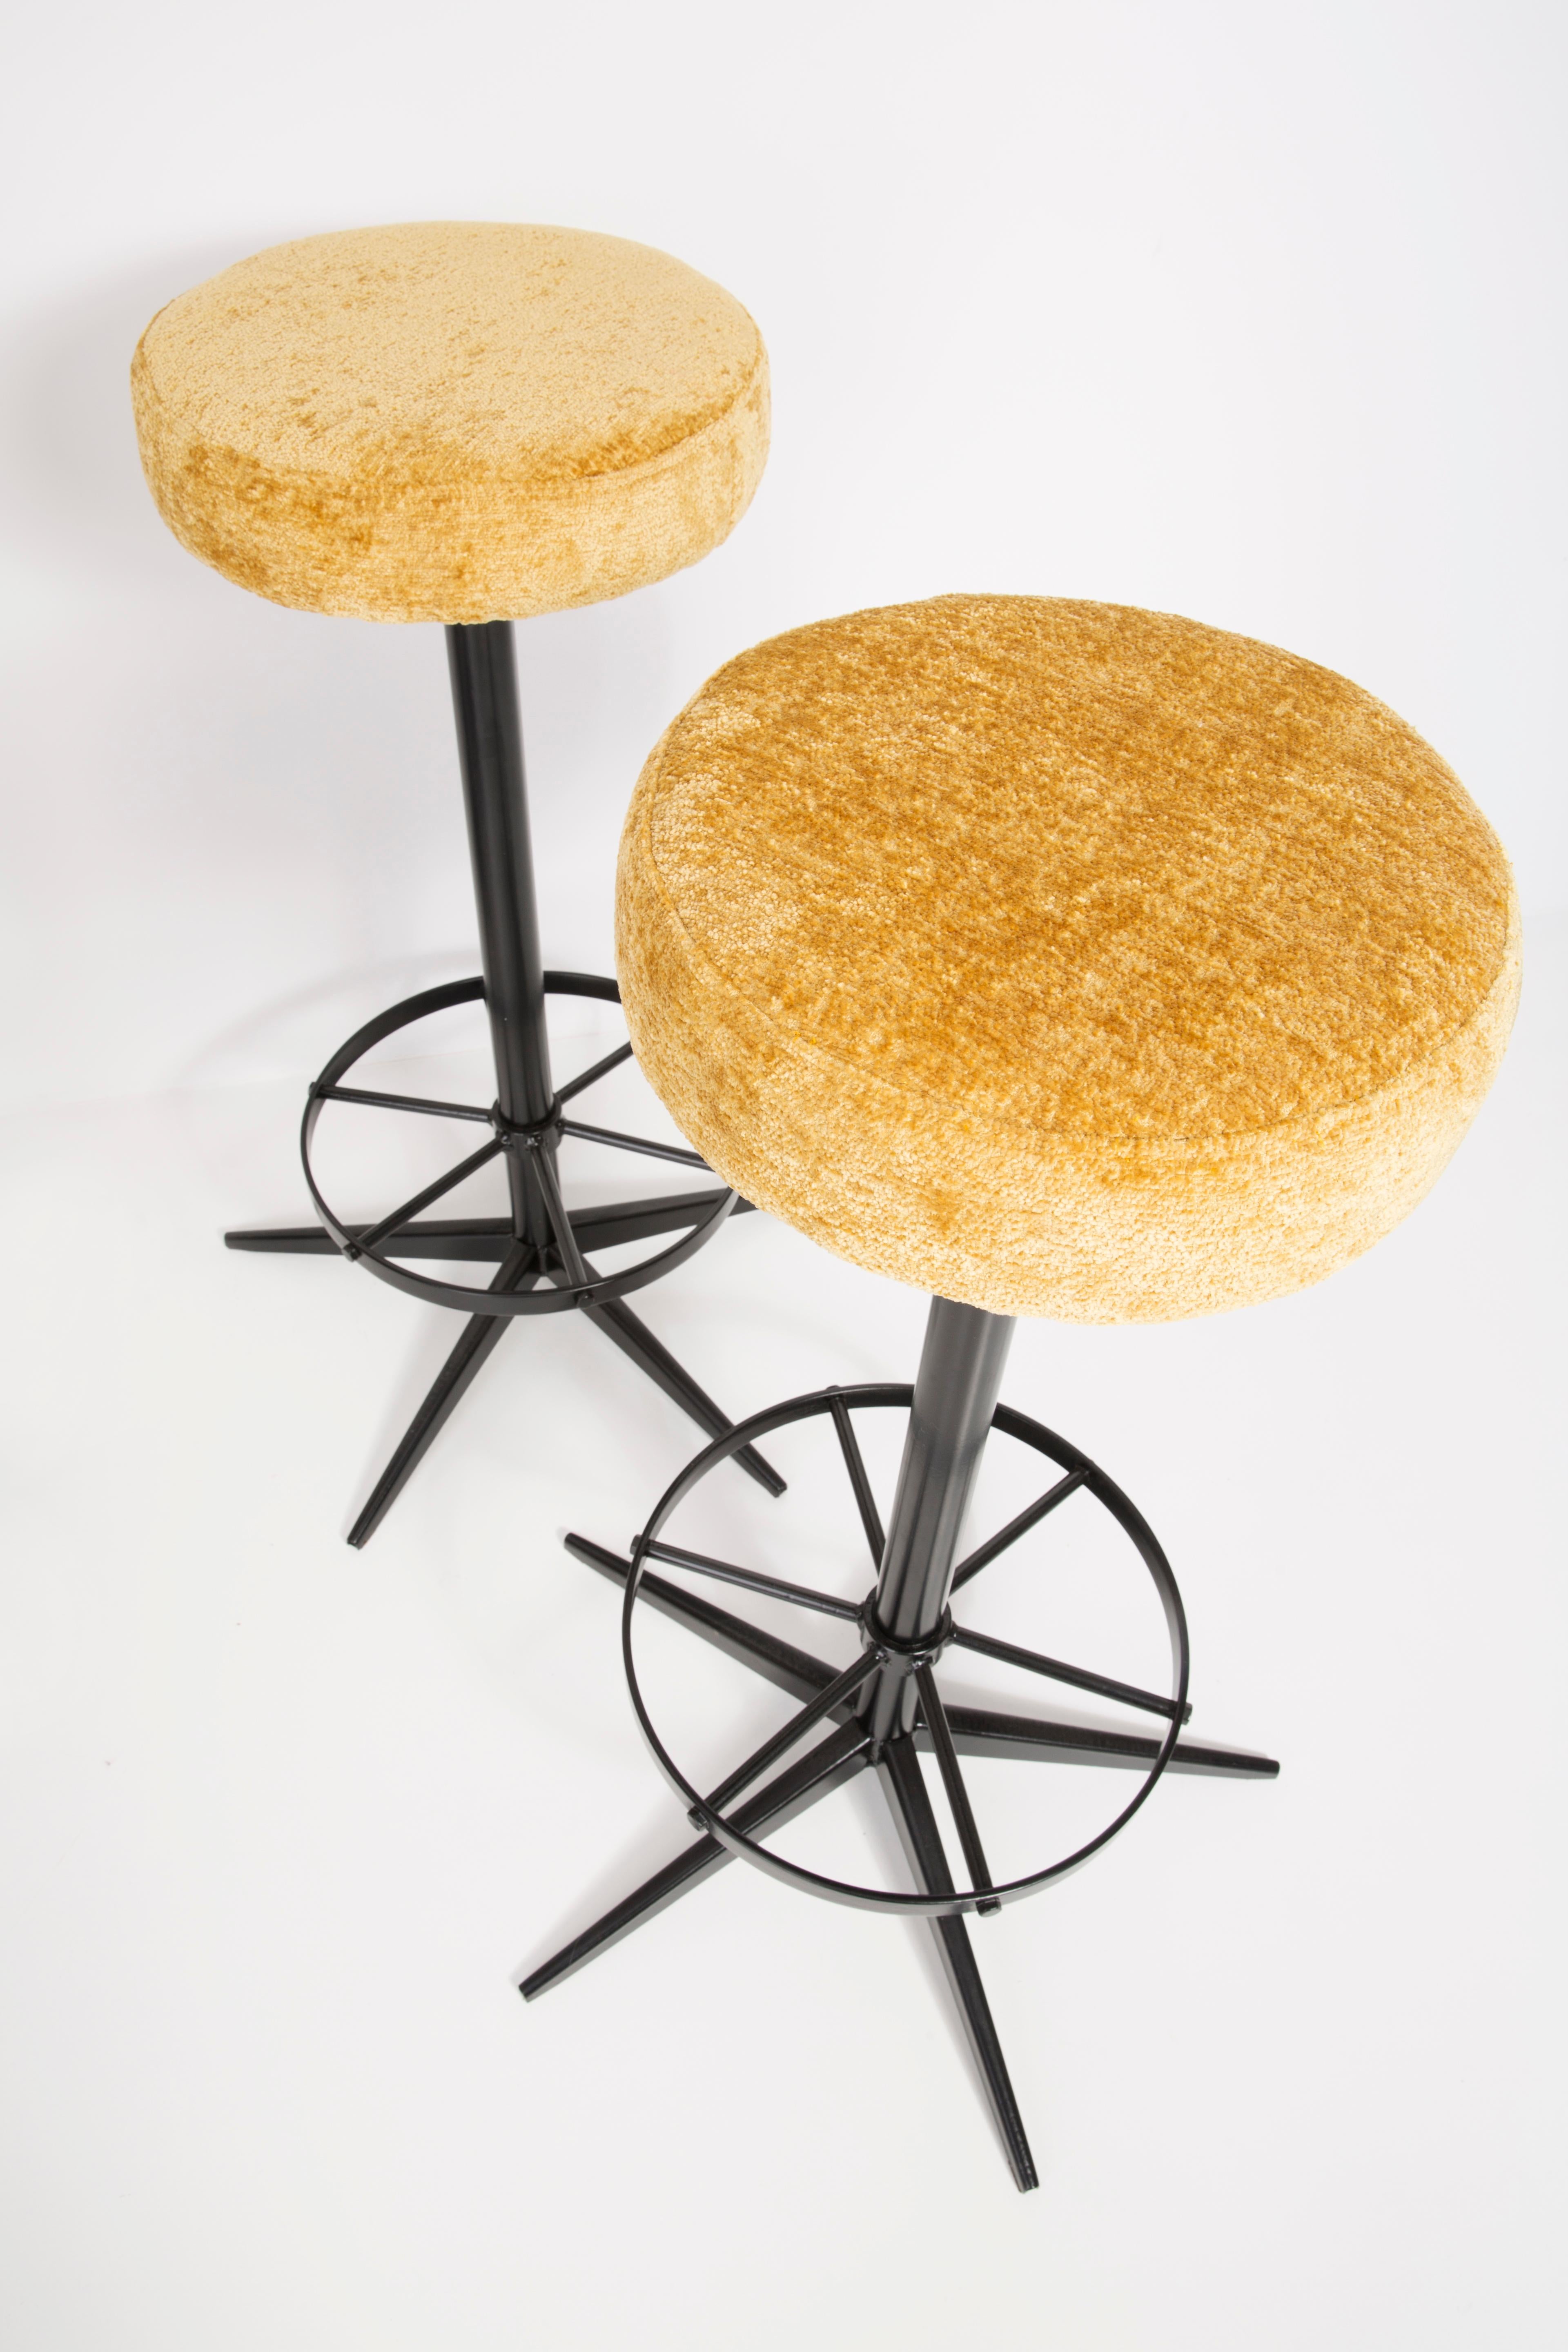 mid century modern bar stools